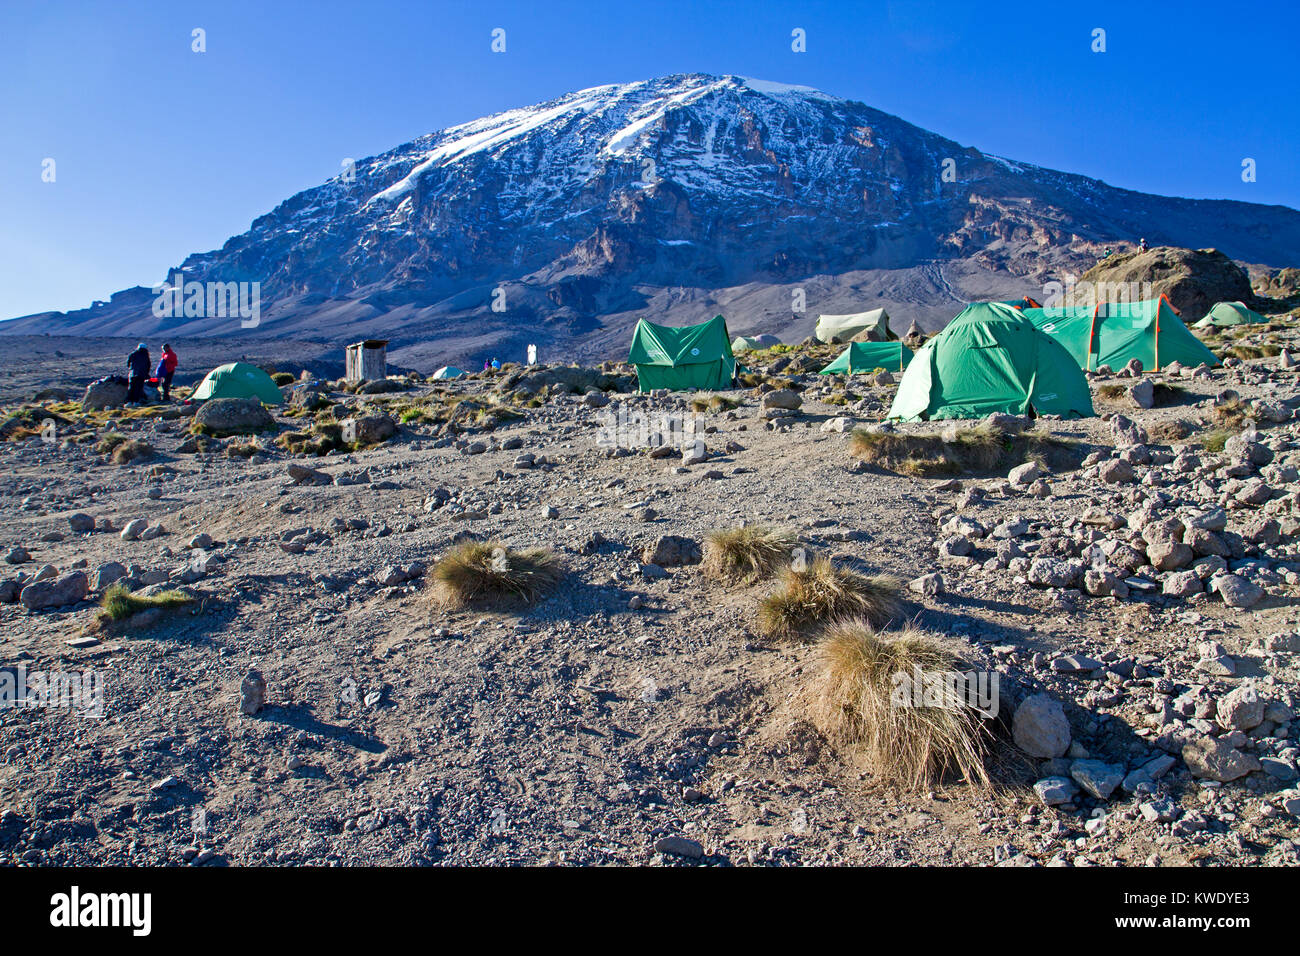 Karanga camp on Mt Kilimanjaro Stock Photo